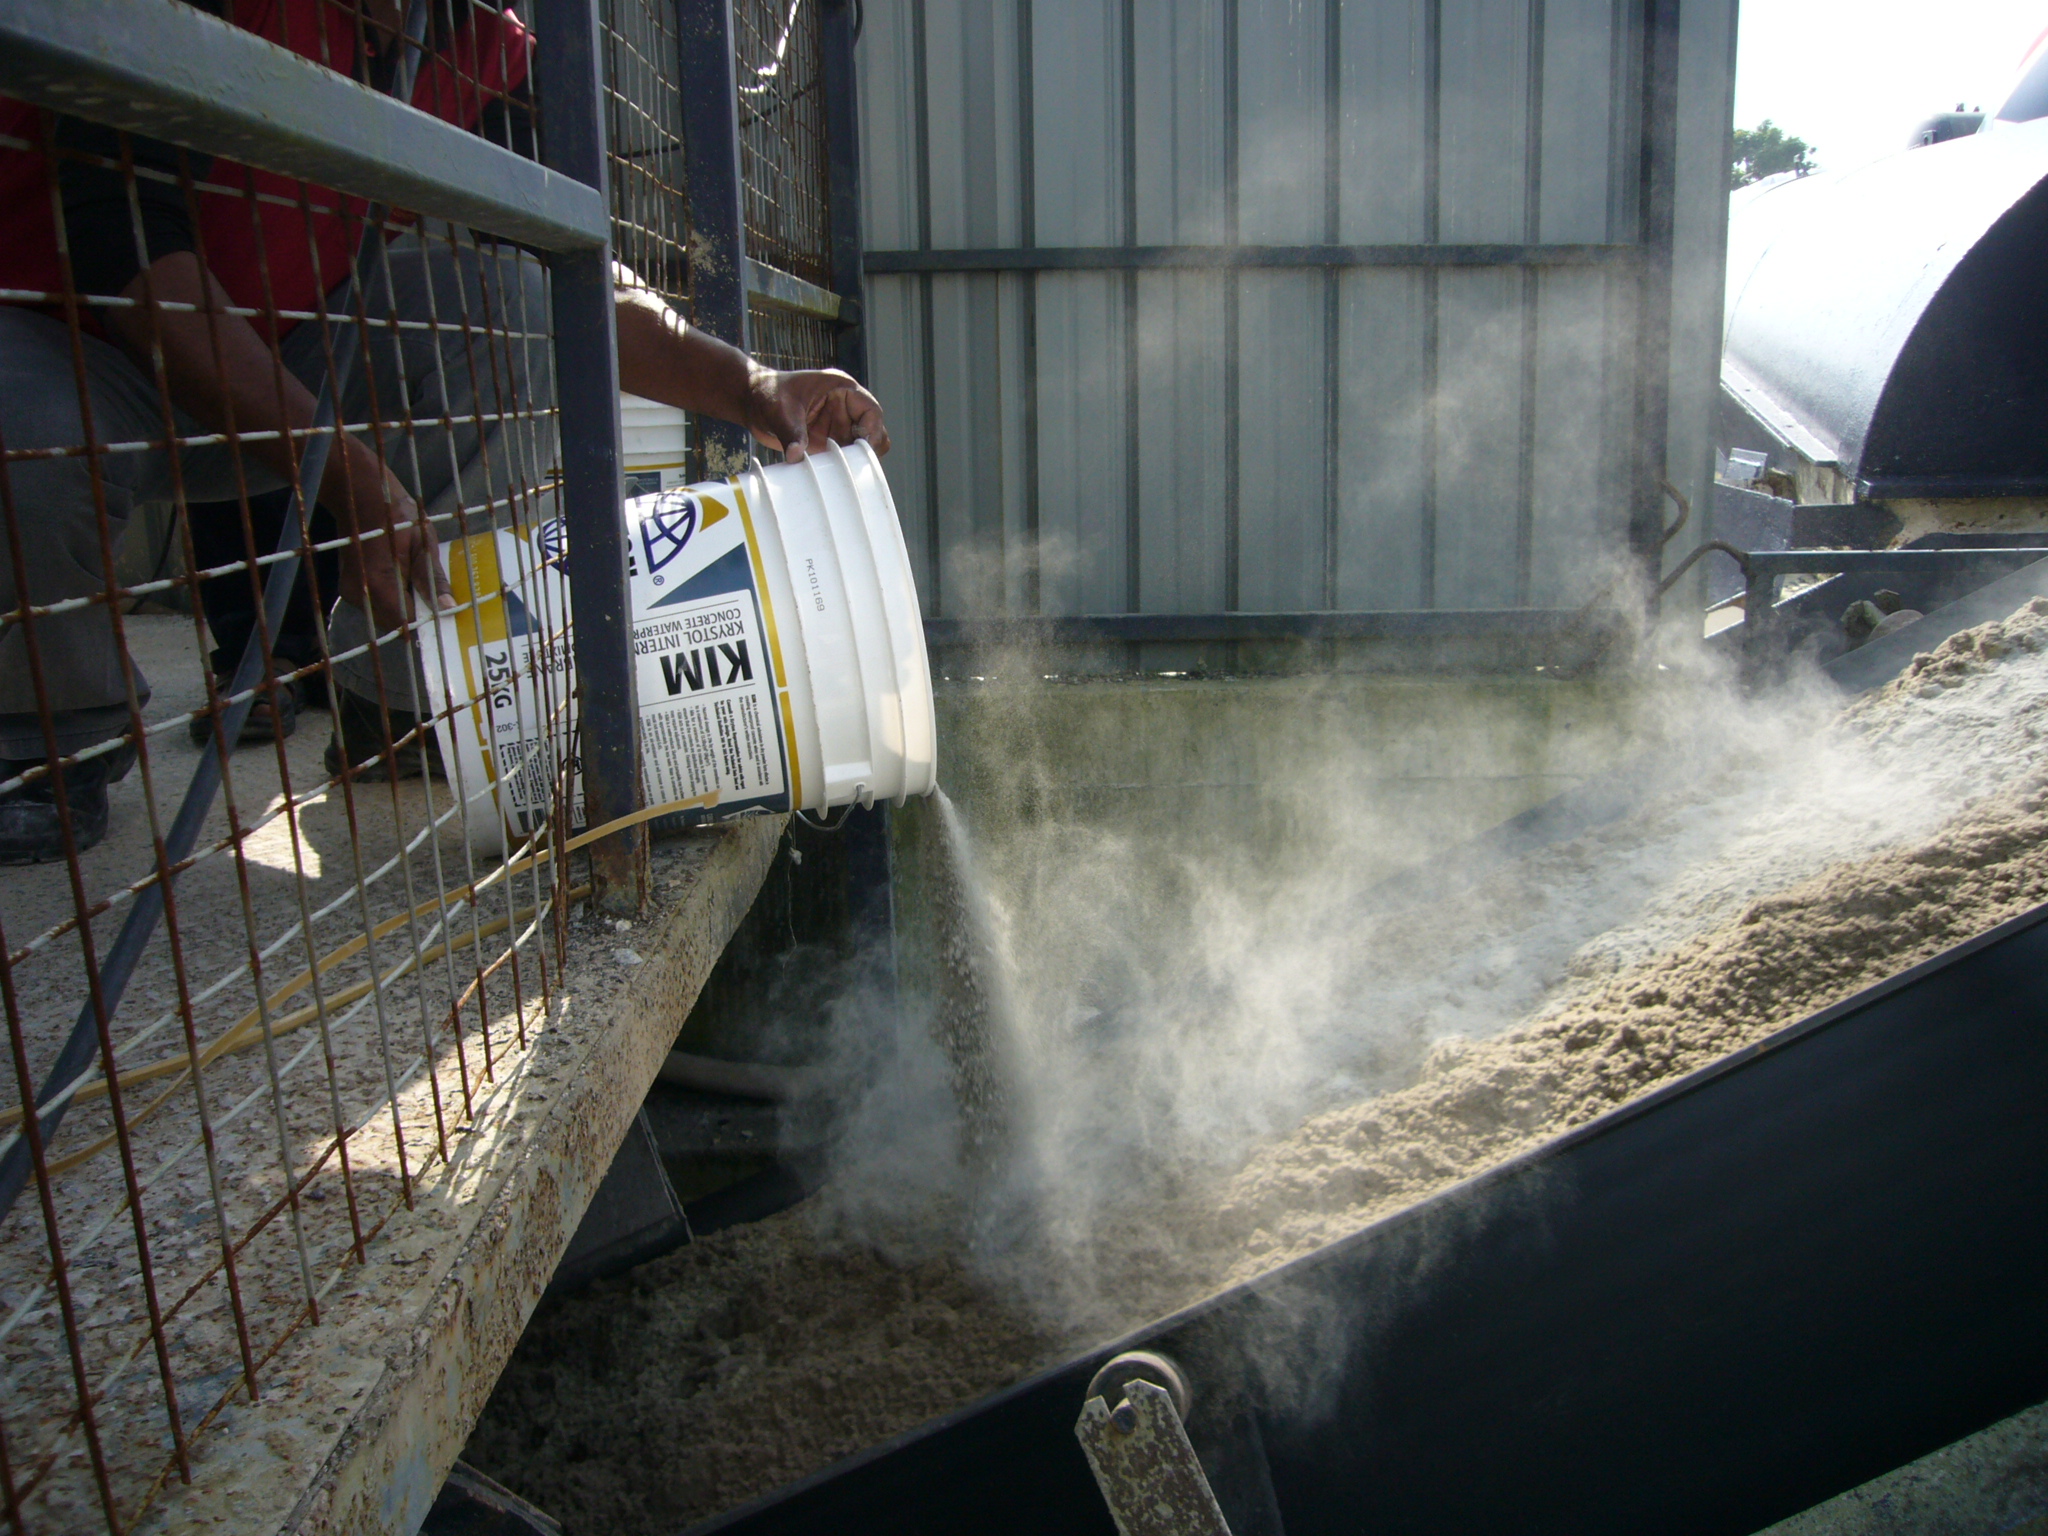 A construction worker is pouring a pail of KIM into a concrete mix.